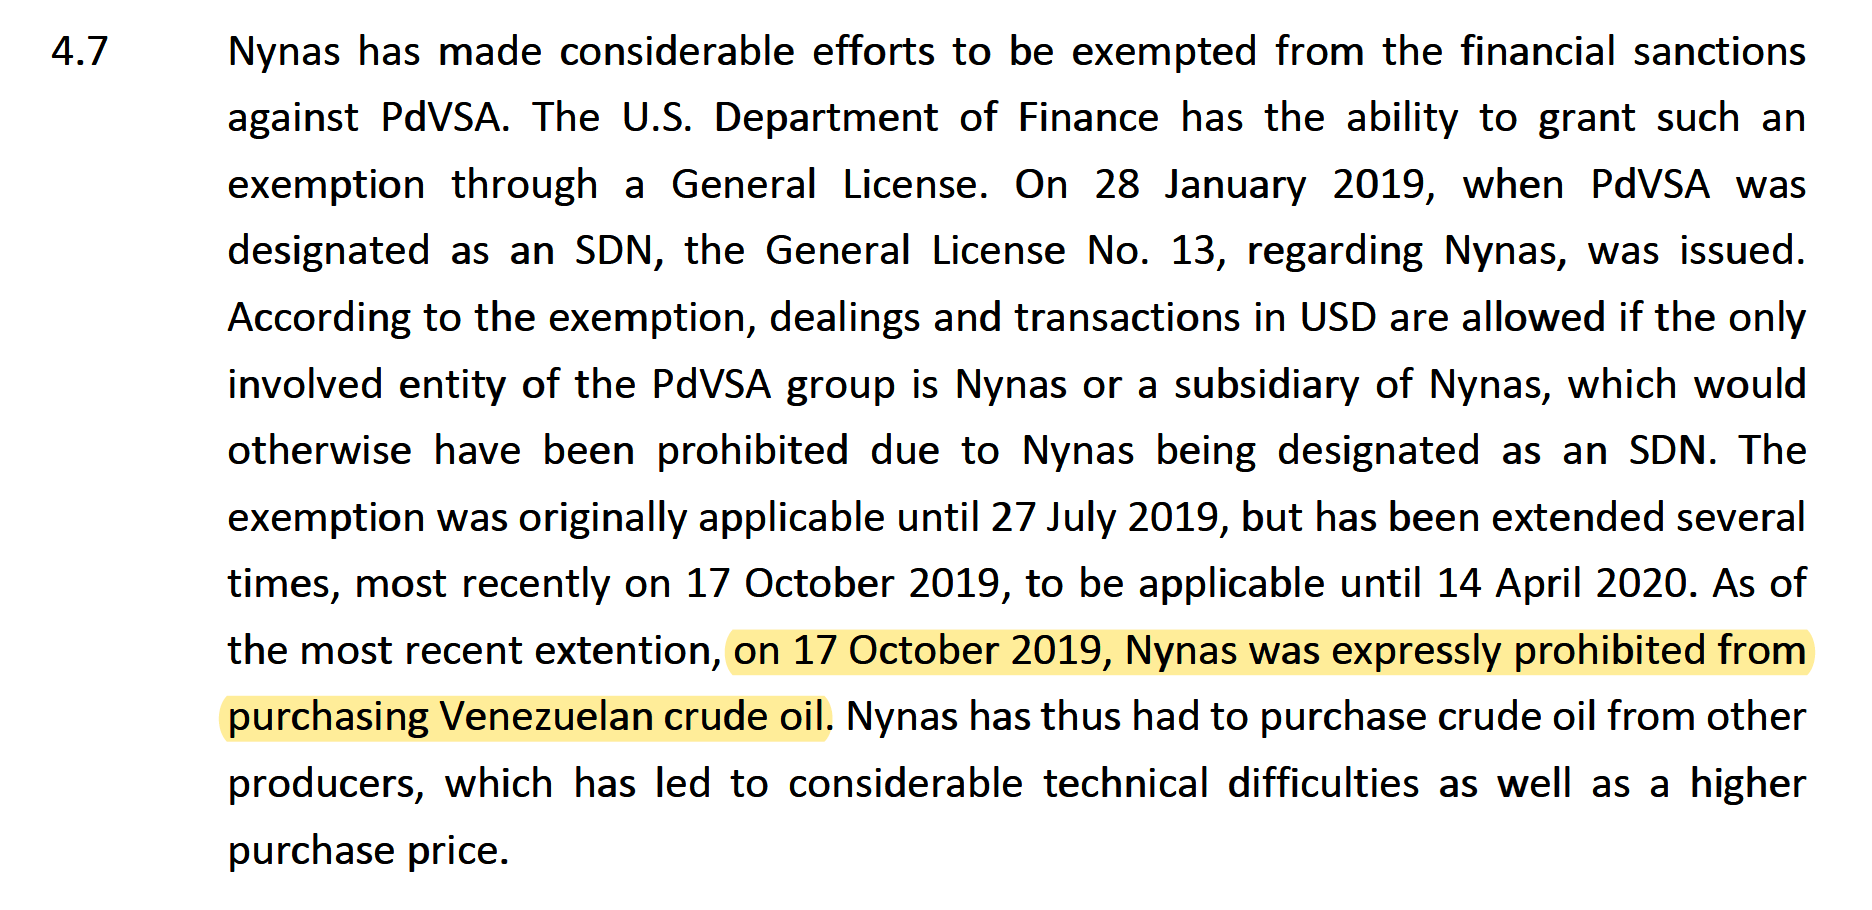 U.S. Treasury probibits Nynas to purchase Venezuelan crude oil